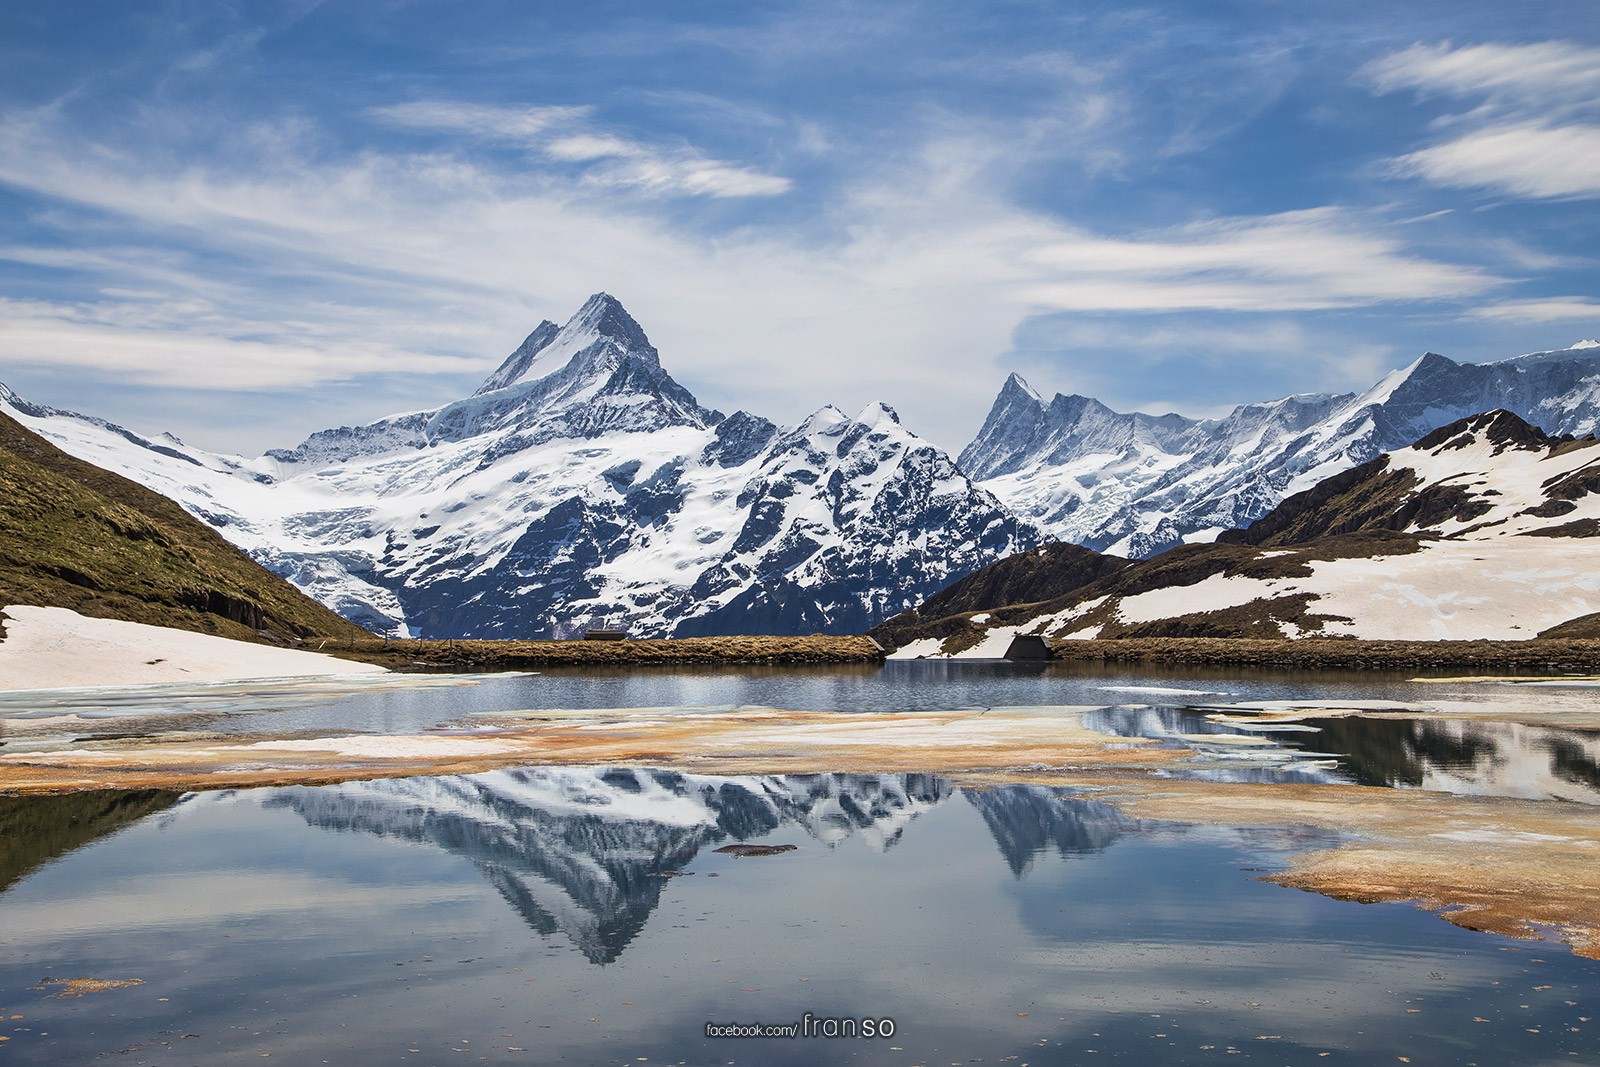 Landscape | Switzerland | Reflection  | Taken at Bachalpsee